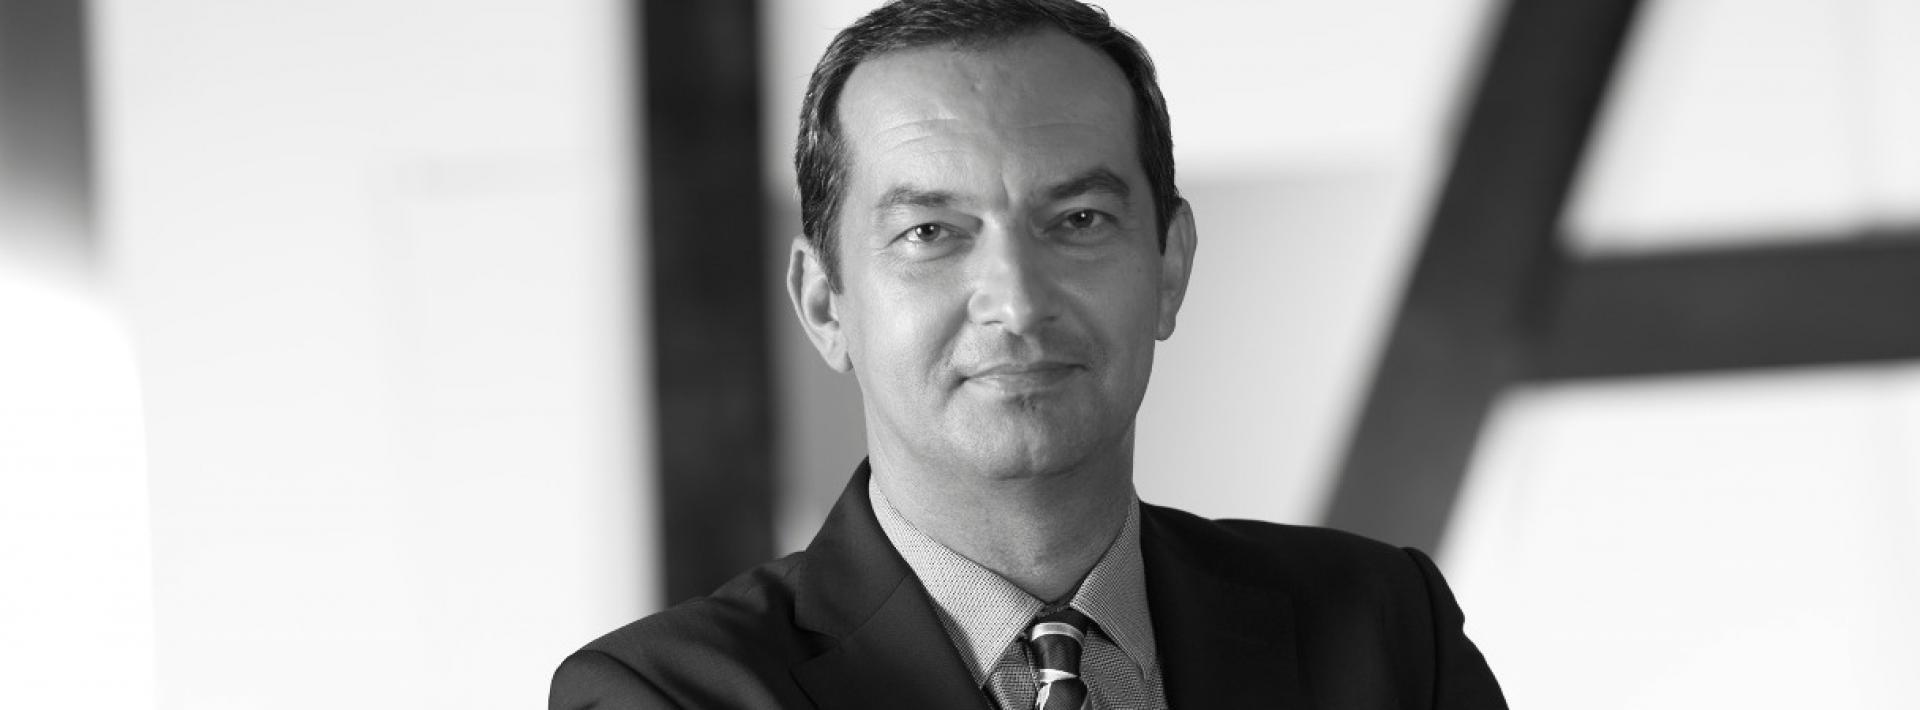  Jarosław Cybulski, CEO of Janda Company on What is Important in Developing a Company